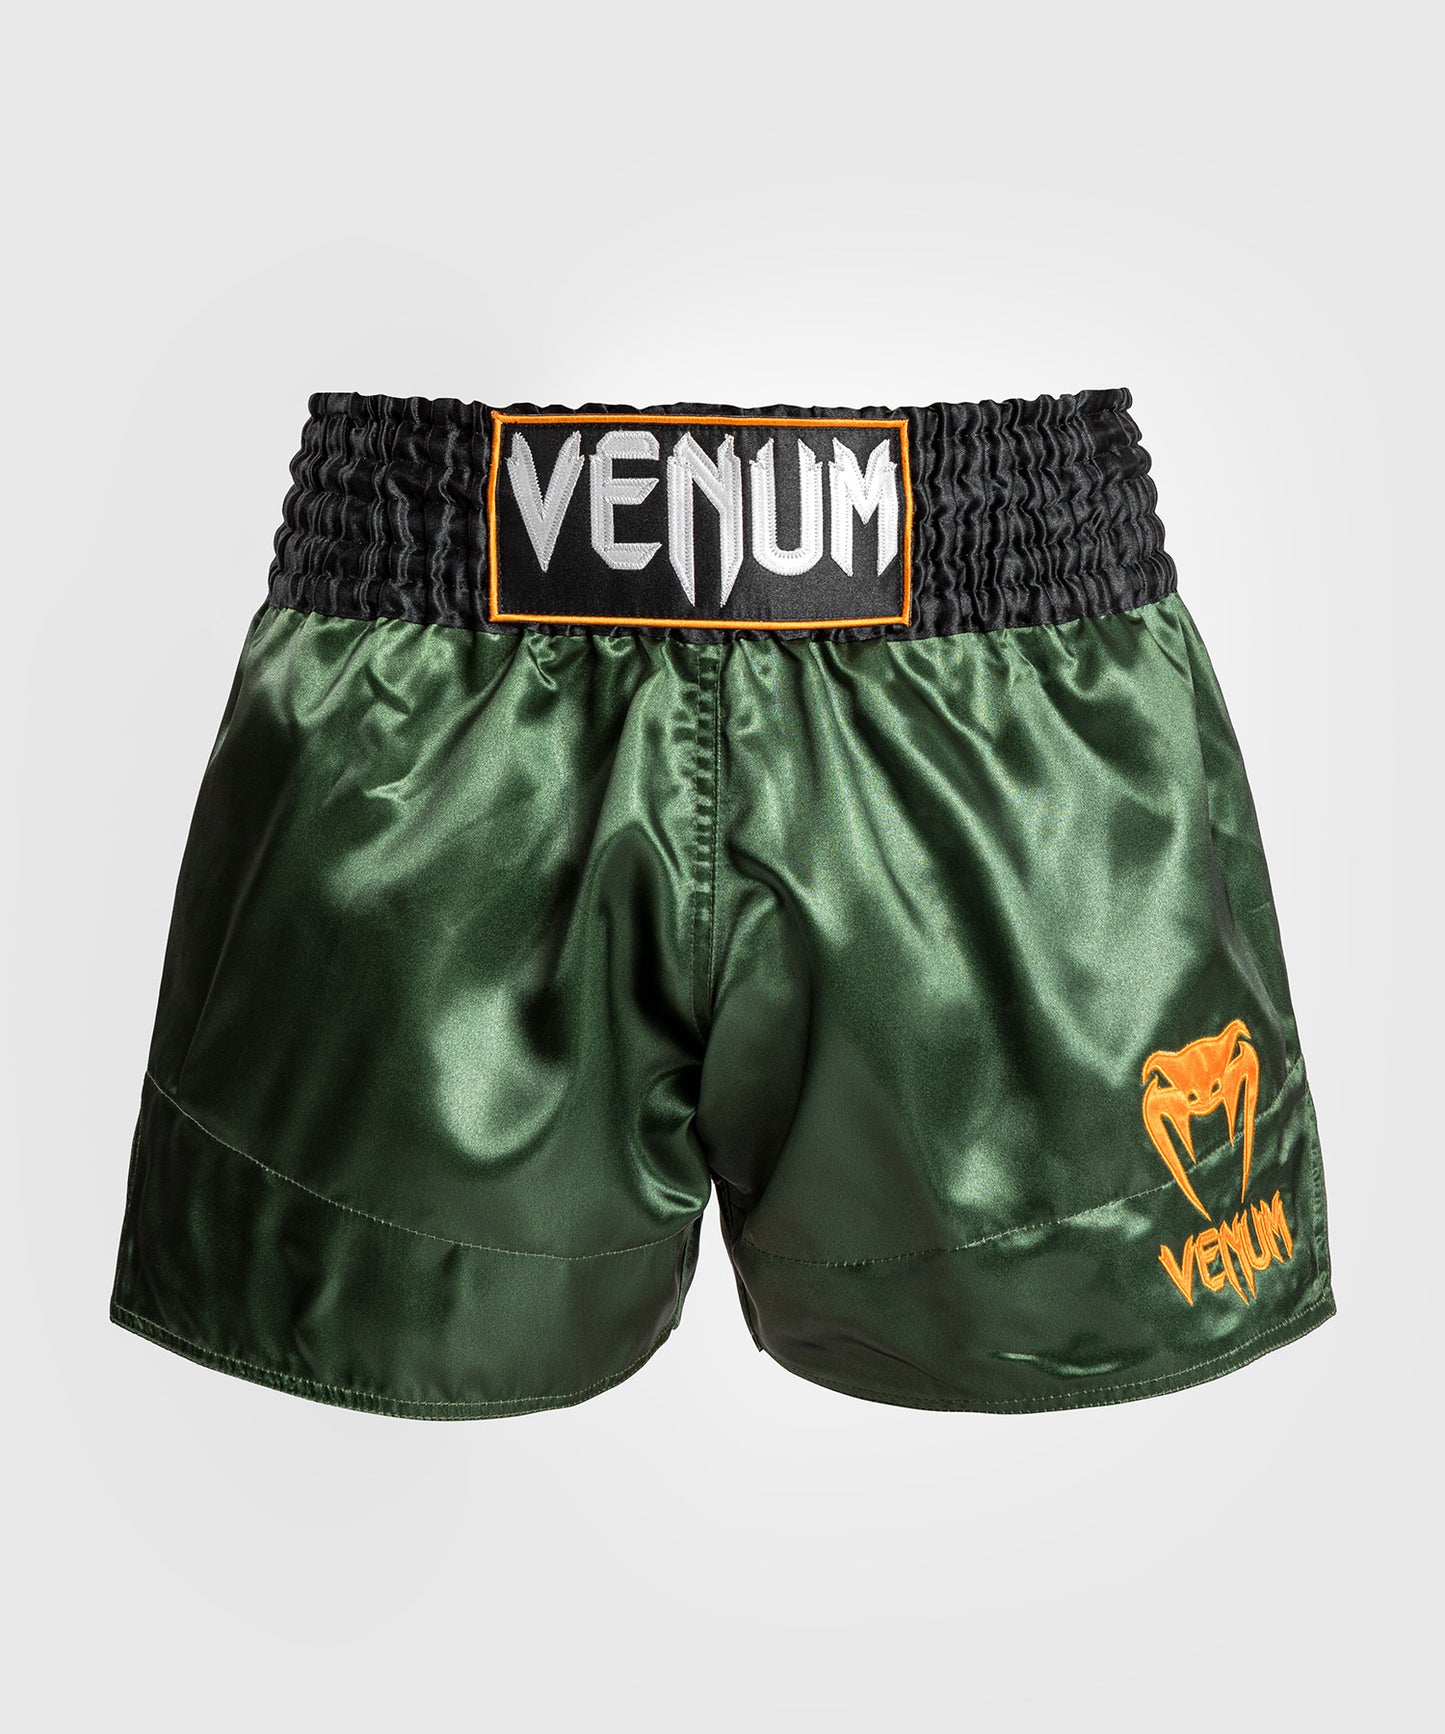 Venum Classic Muay Thai Shorts - Grün/Gold/Schwarz